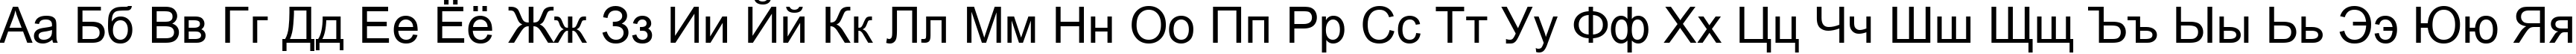 Пример написания русского алфавита шрифтом Arial Unicode MS